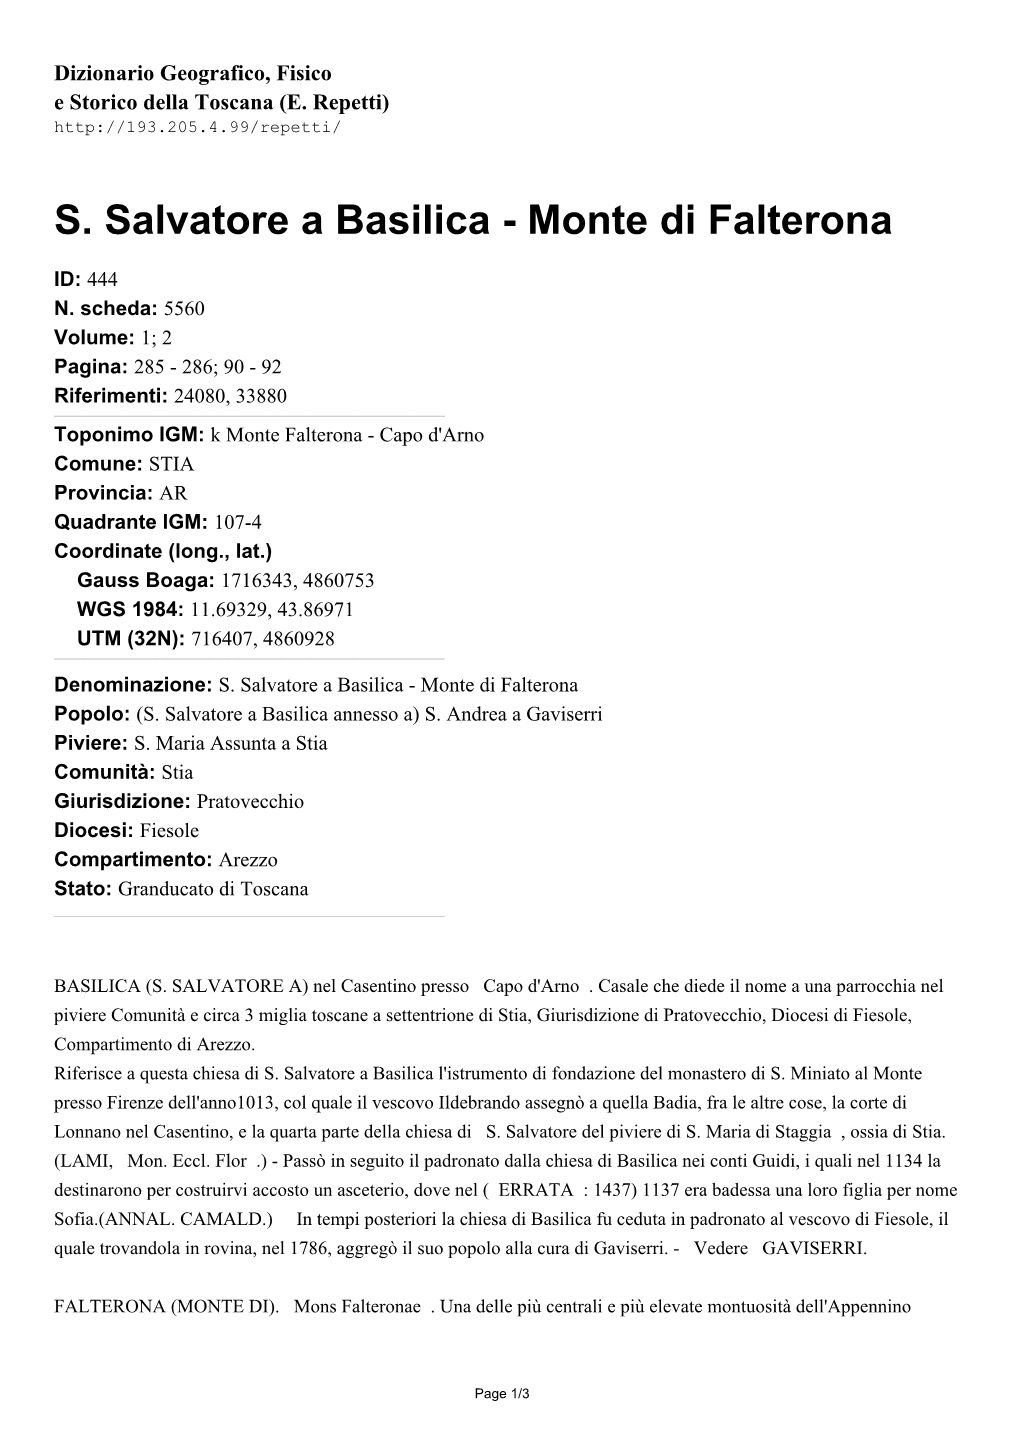 S. Salvatore a Basilica - Monte Di Falterona